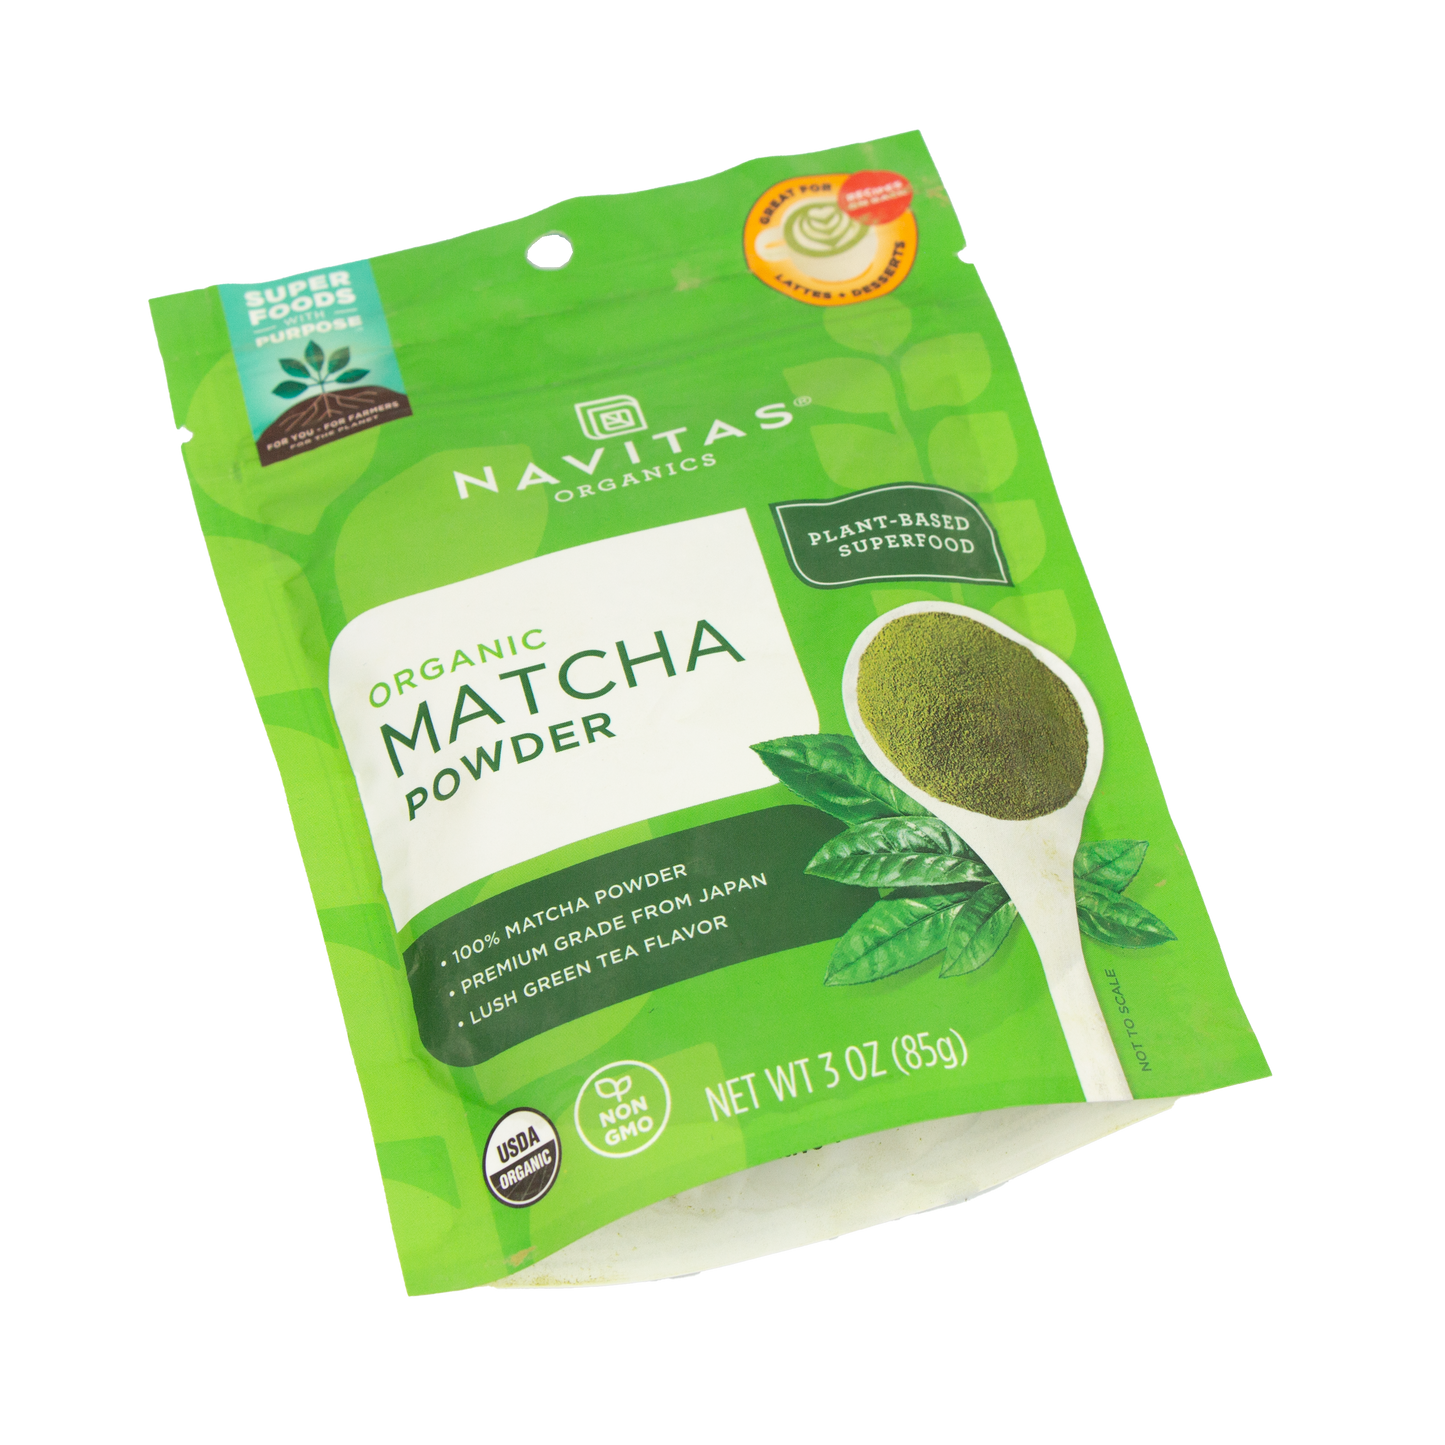 Navitas Organics - Organic Matcha Powder